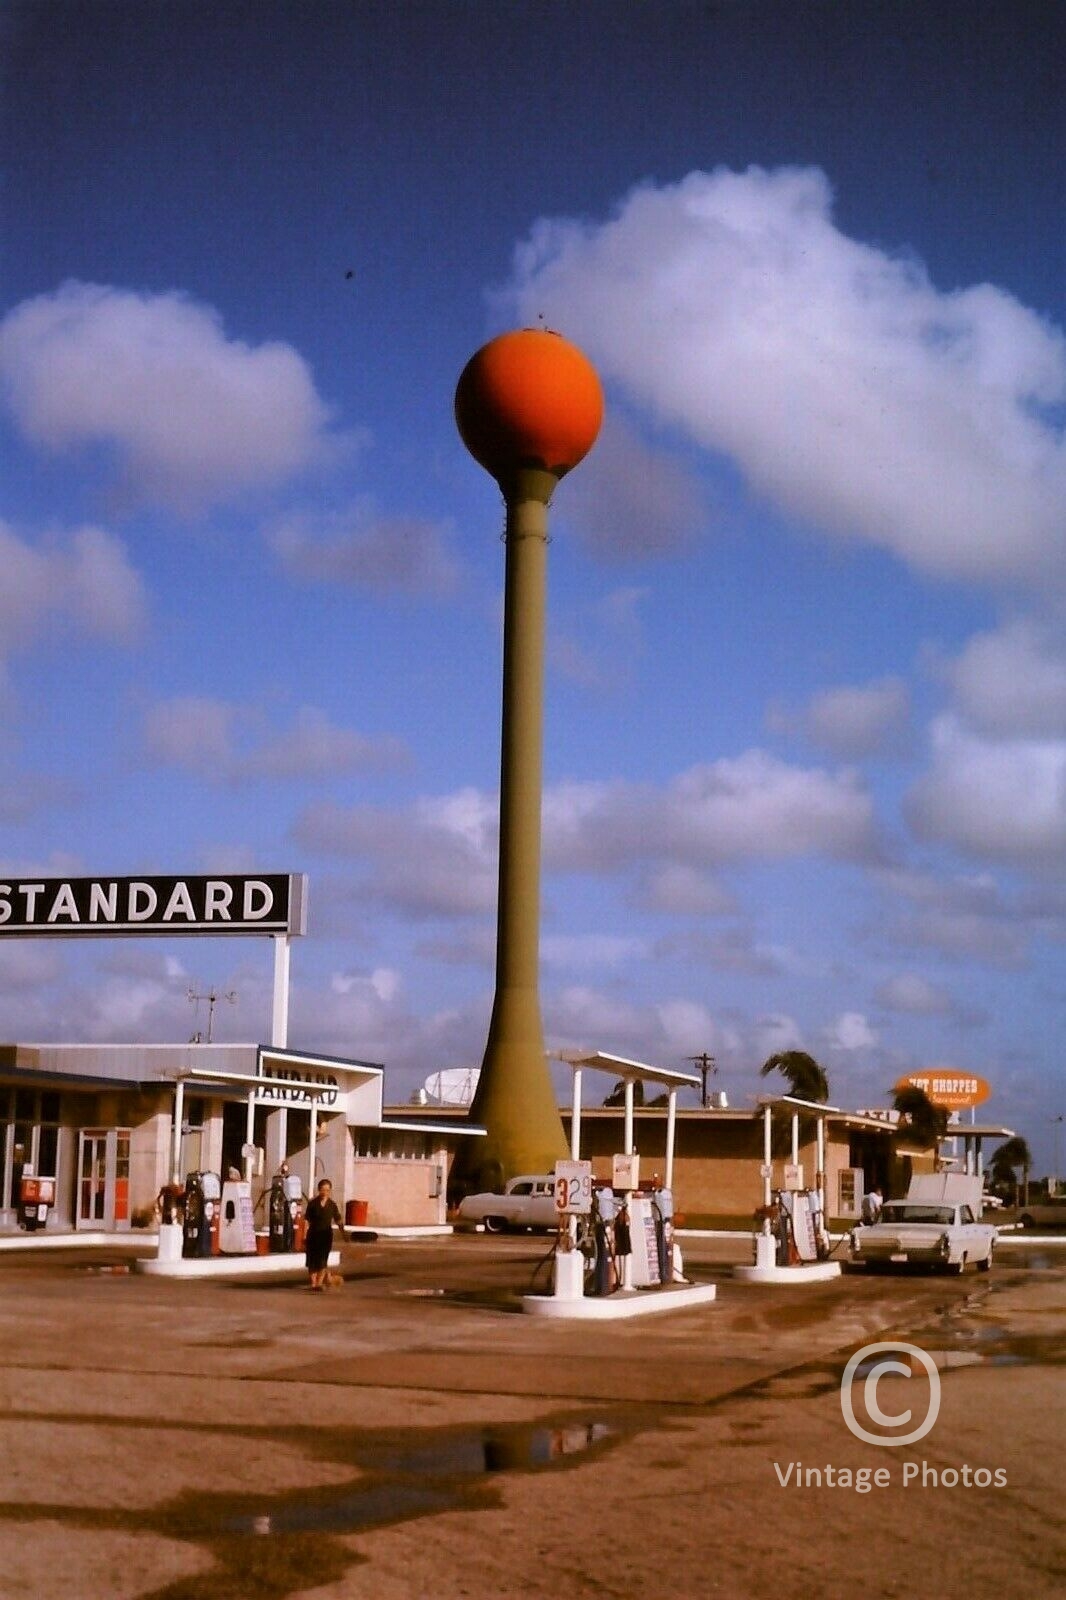 1965 Standard Gas Station - Car Refueling